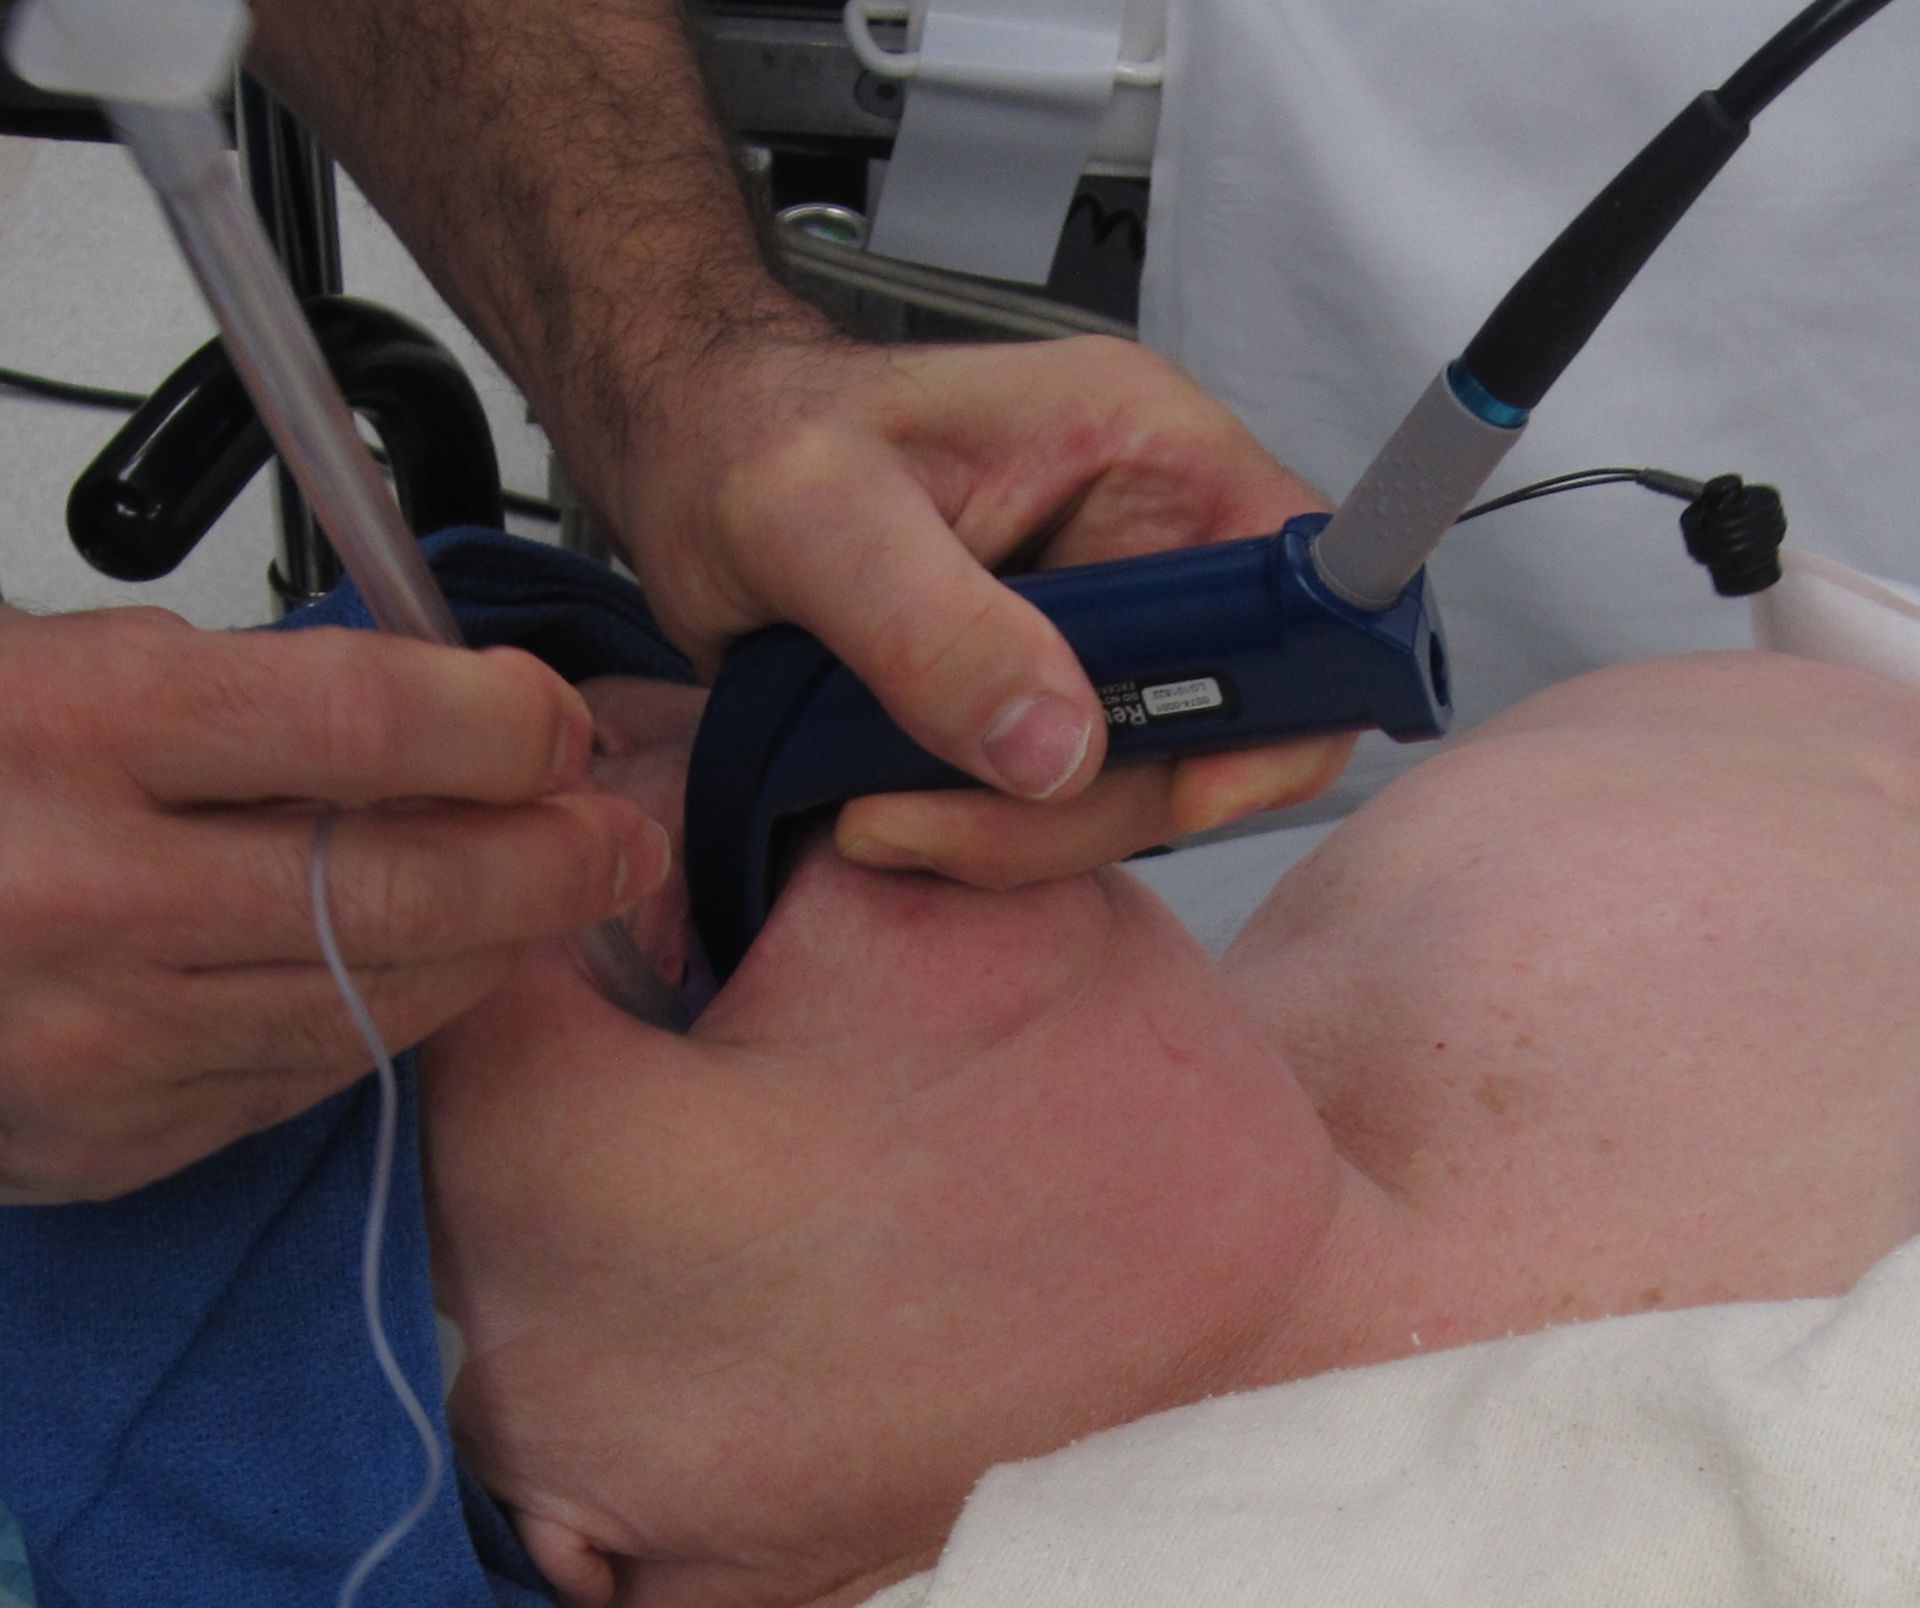 Intubation by video laryngoscope